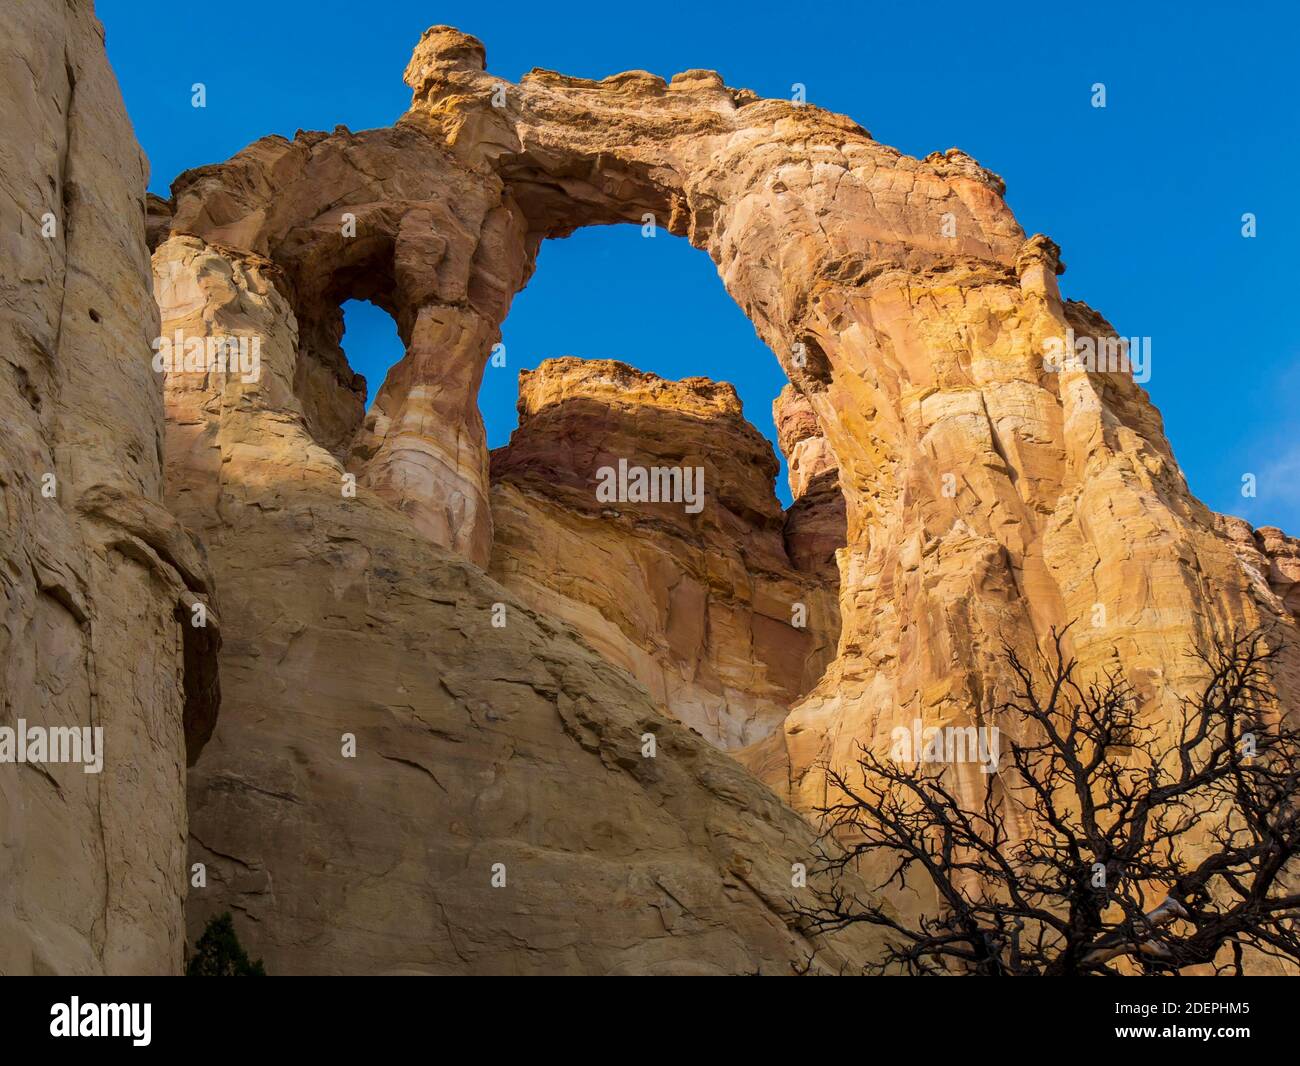 Grosvenor Arch near Kodachrome Basin State Park, south of Cannonville, Utah. Stock Photo